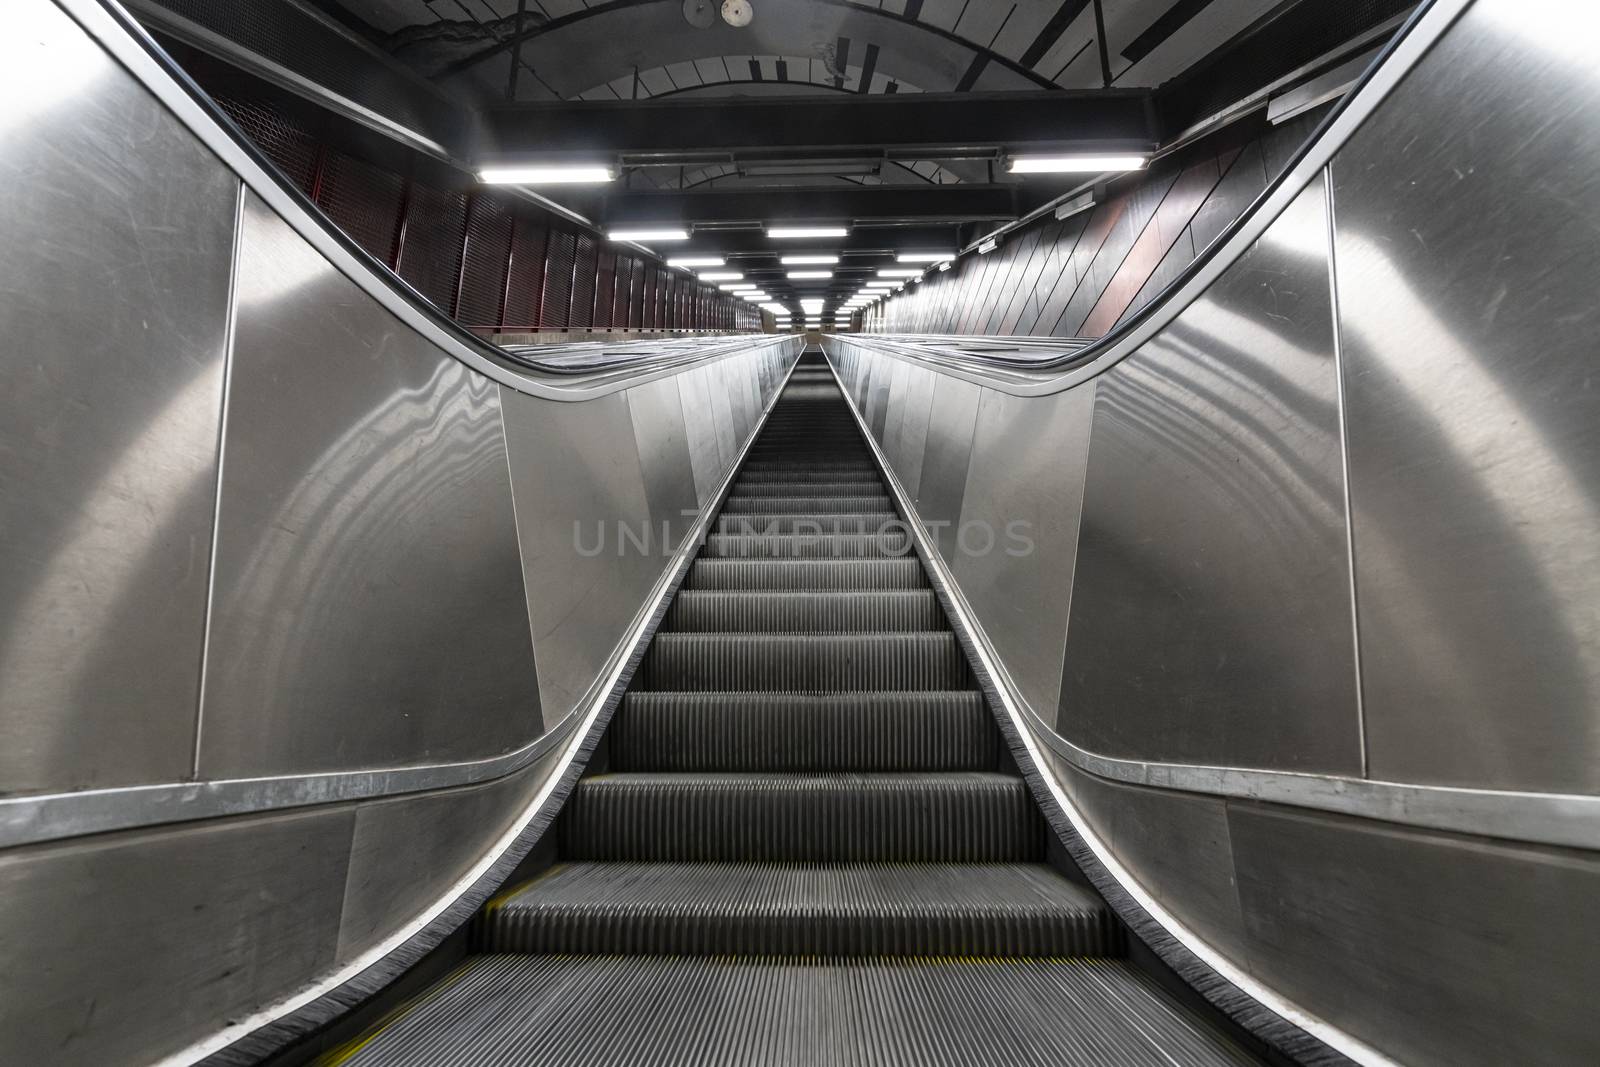 Stockholm, Sweden. September 2019. the escalators in the Kungstradgarden Metro Station